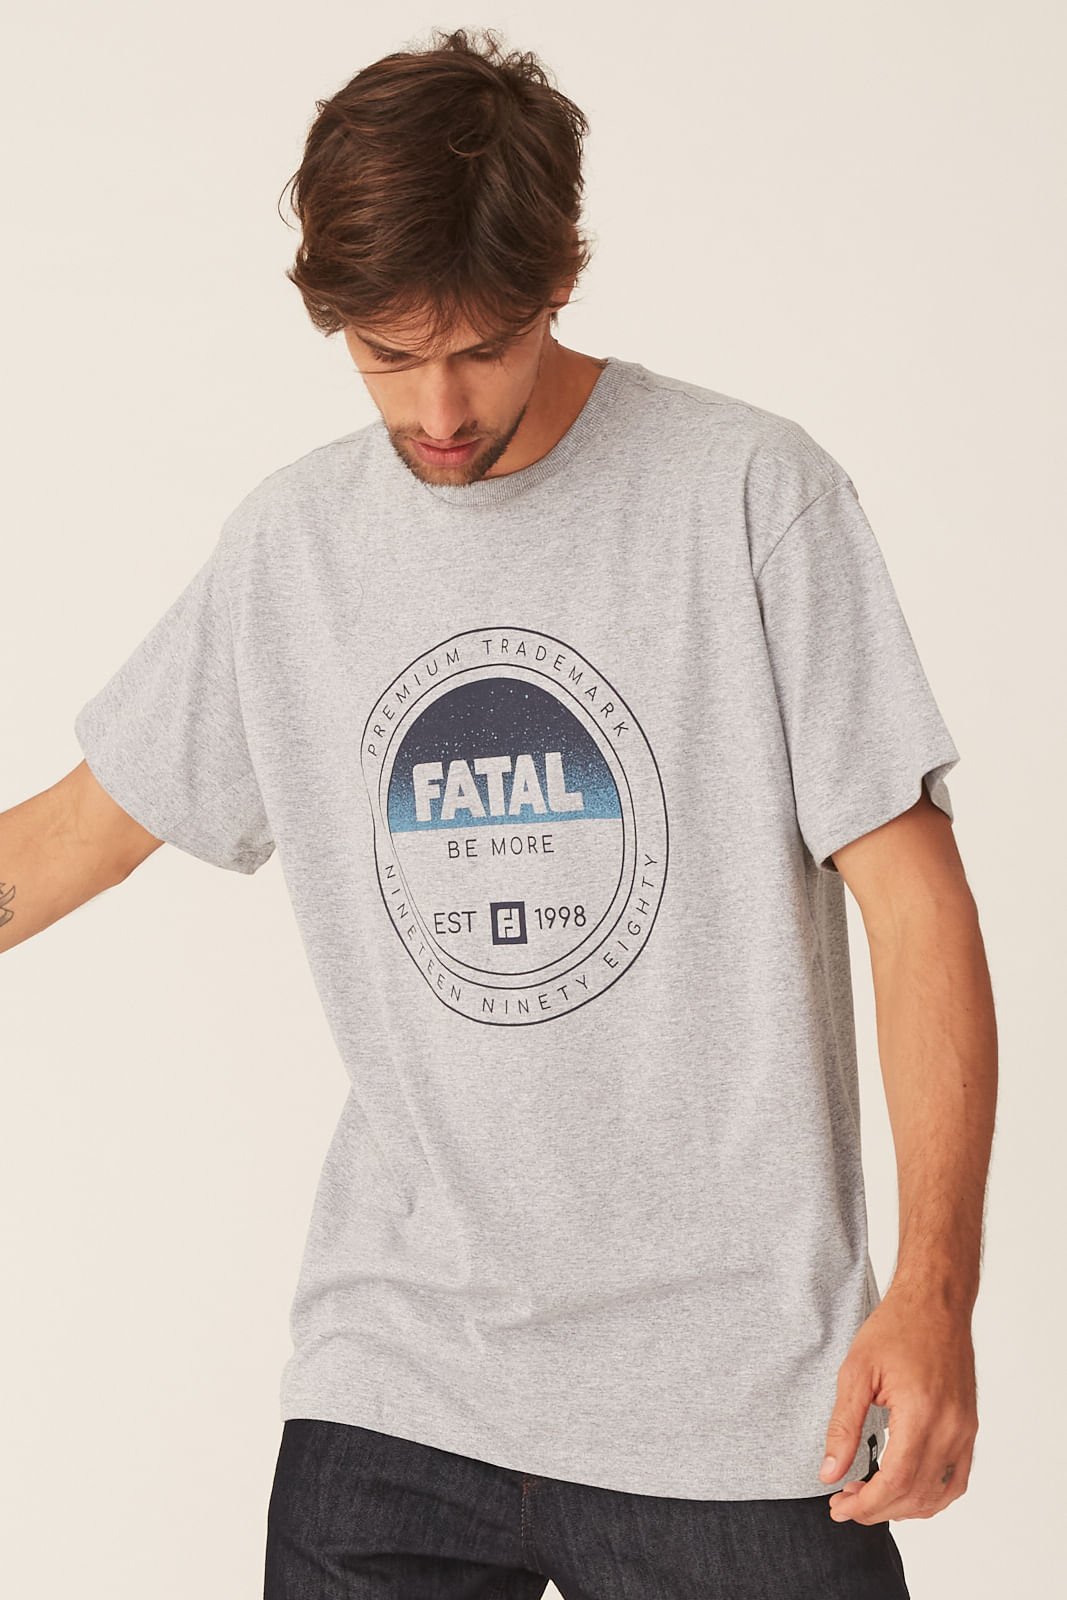 Camiseta Fatal Plus Size Estampada Cinza Mescla